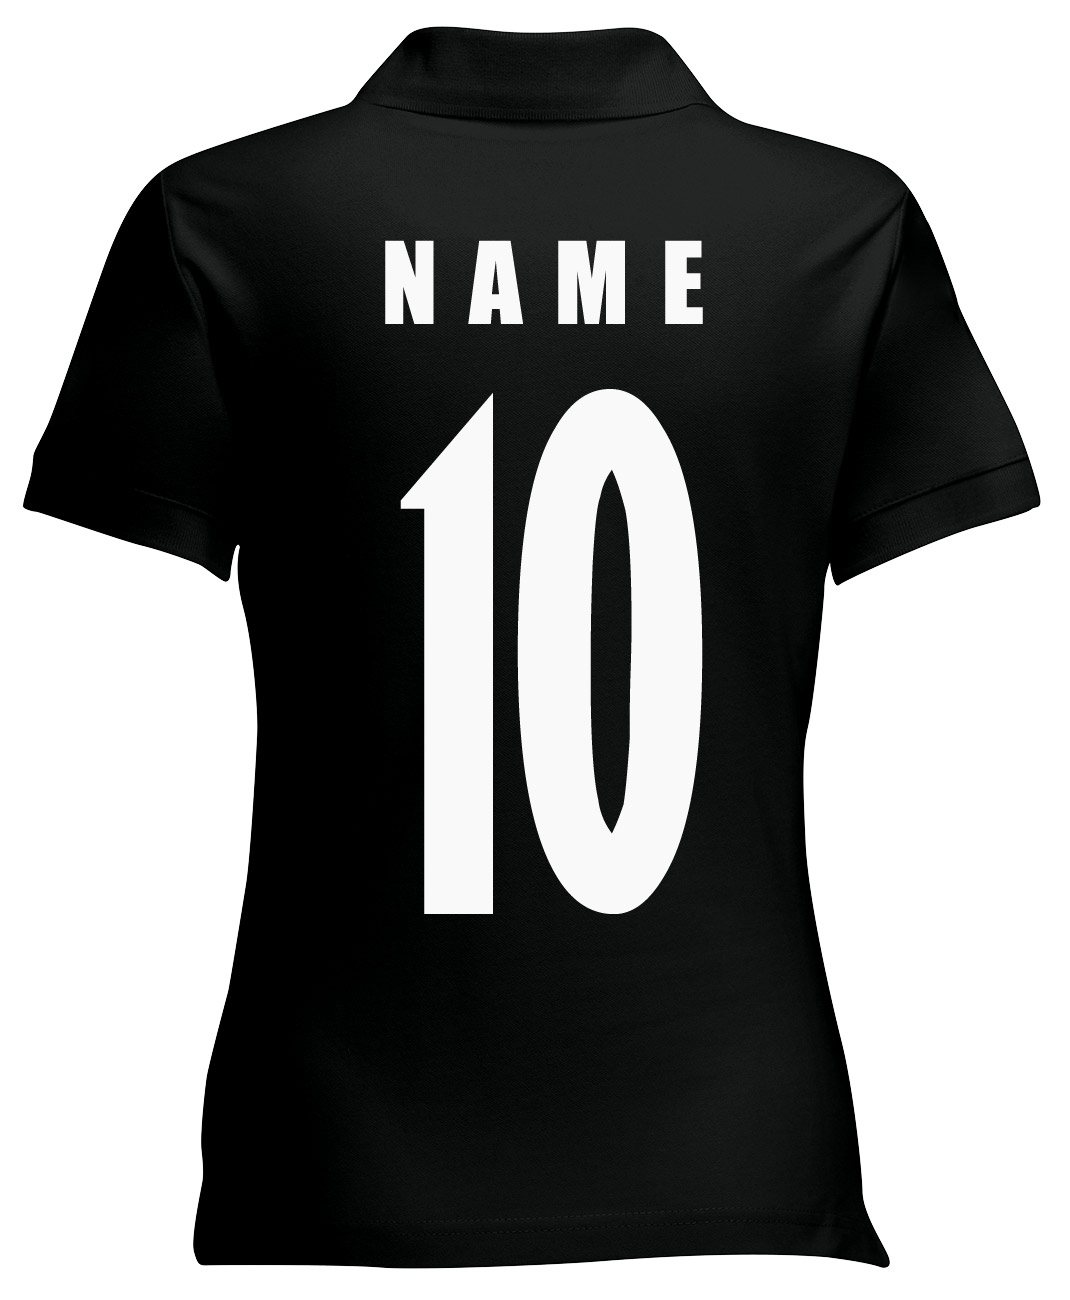 Mexiko Mexico Damen Trikot Fanshirt Top Shirt WM 2018 Name Nummer 